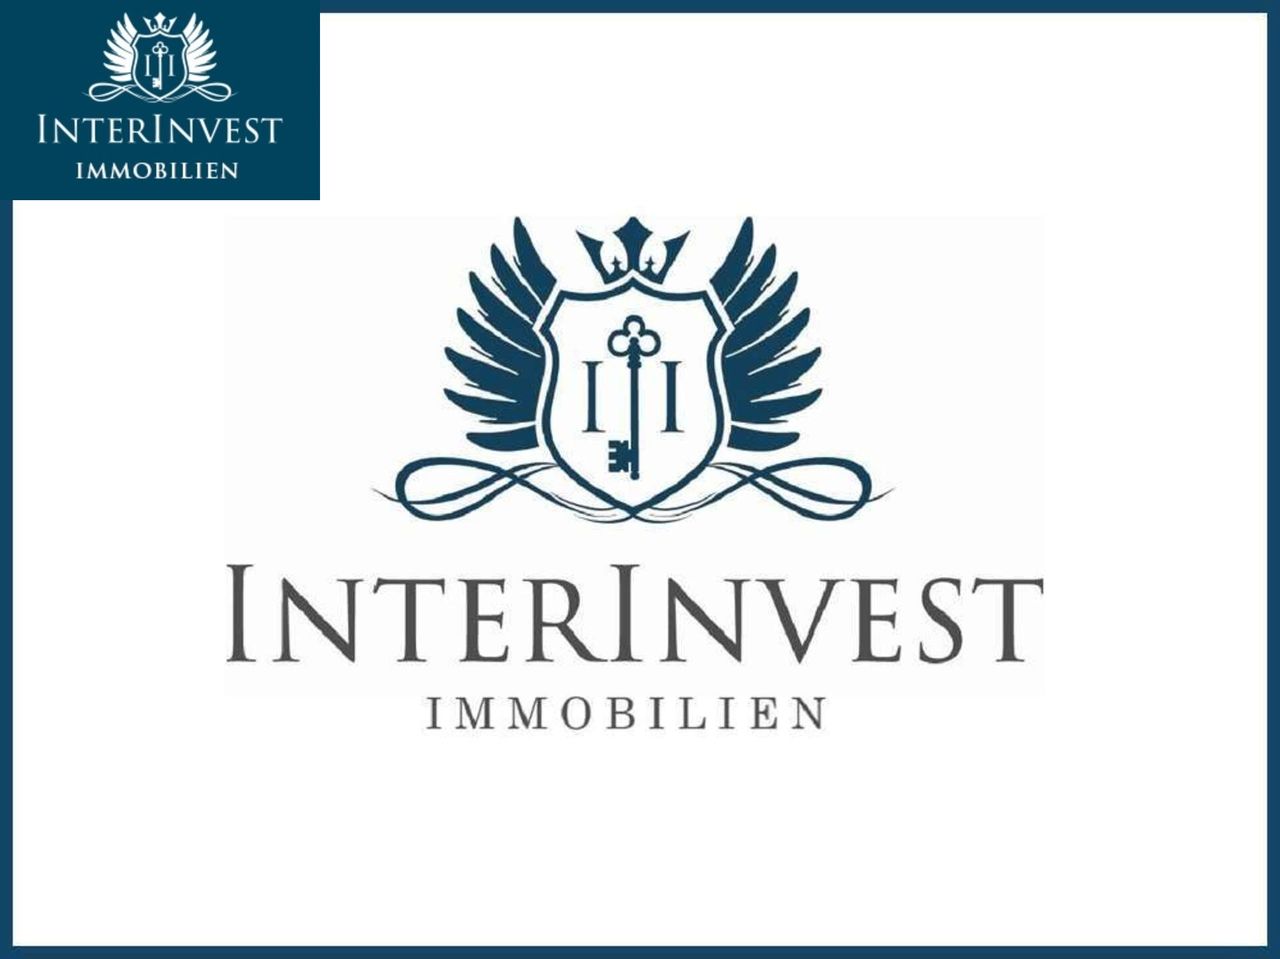 InterInvest